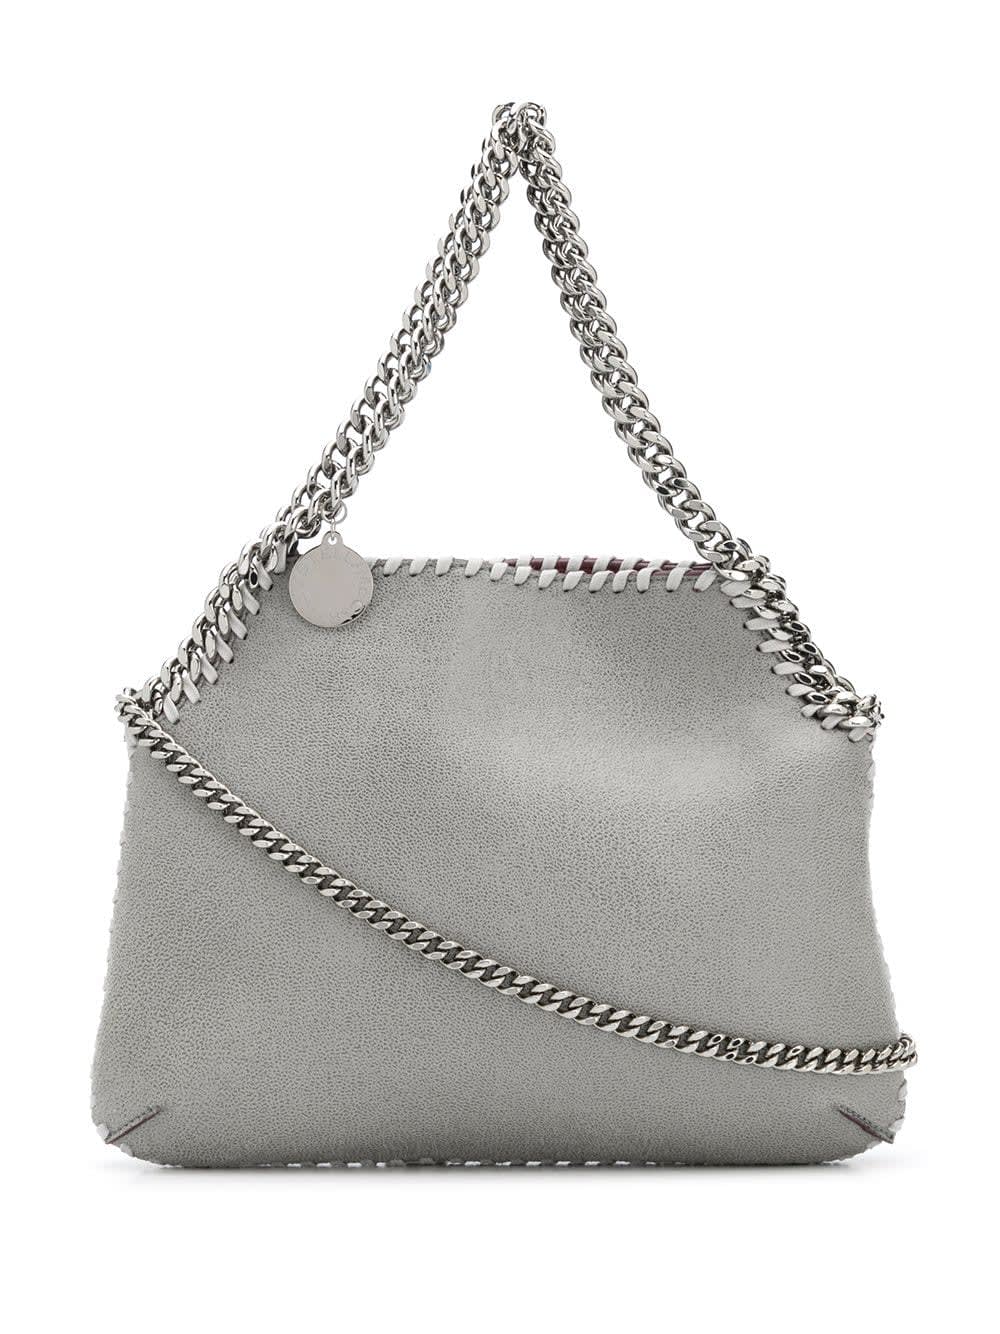 Stella McCartney Grey And Silver Falabella Mini Shoulder Bag